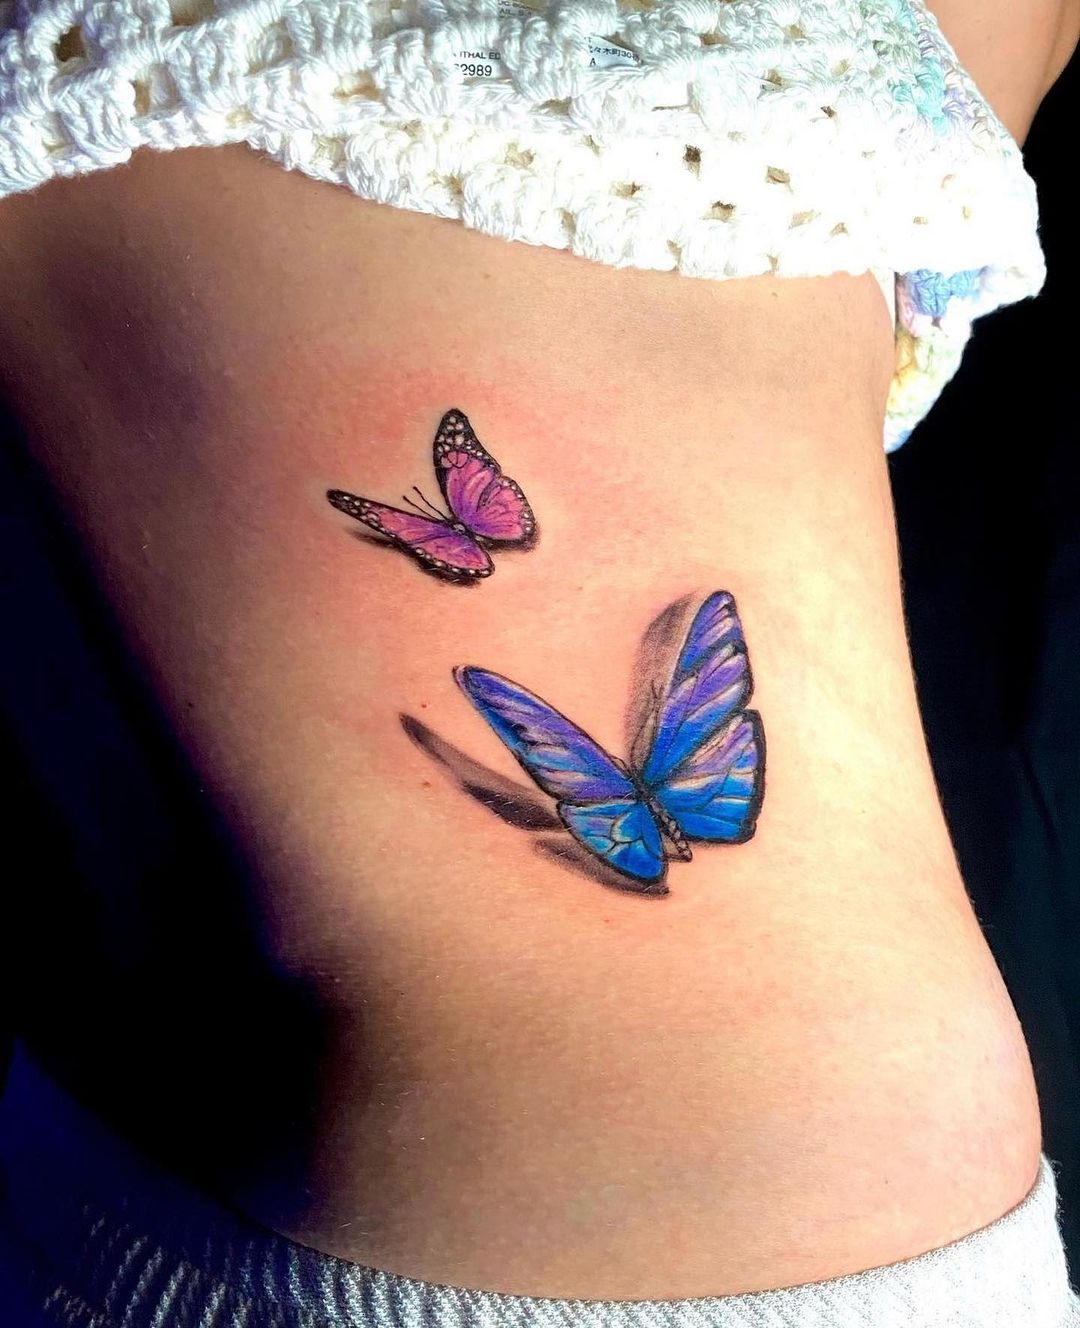 30+ Best Butterfly Tattoos Design You’ll Love To Get Next. Butterfly 3D Tattoos 